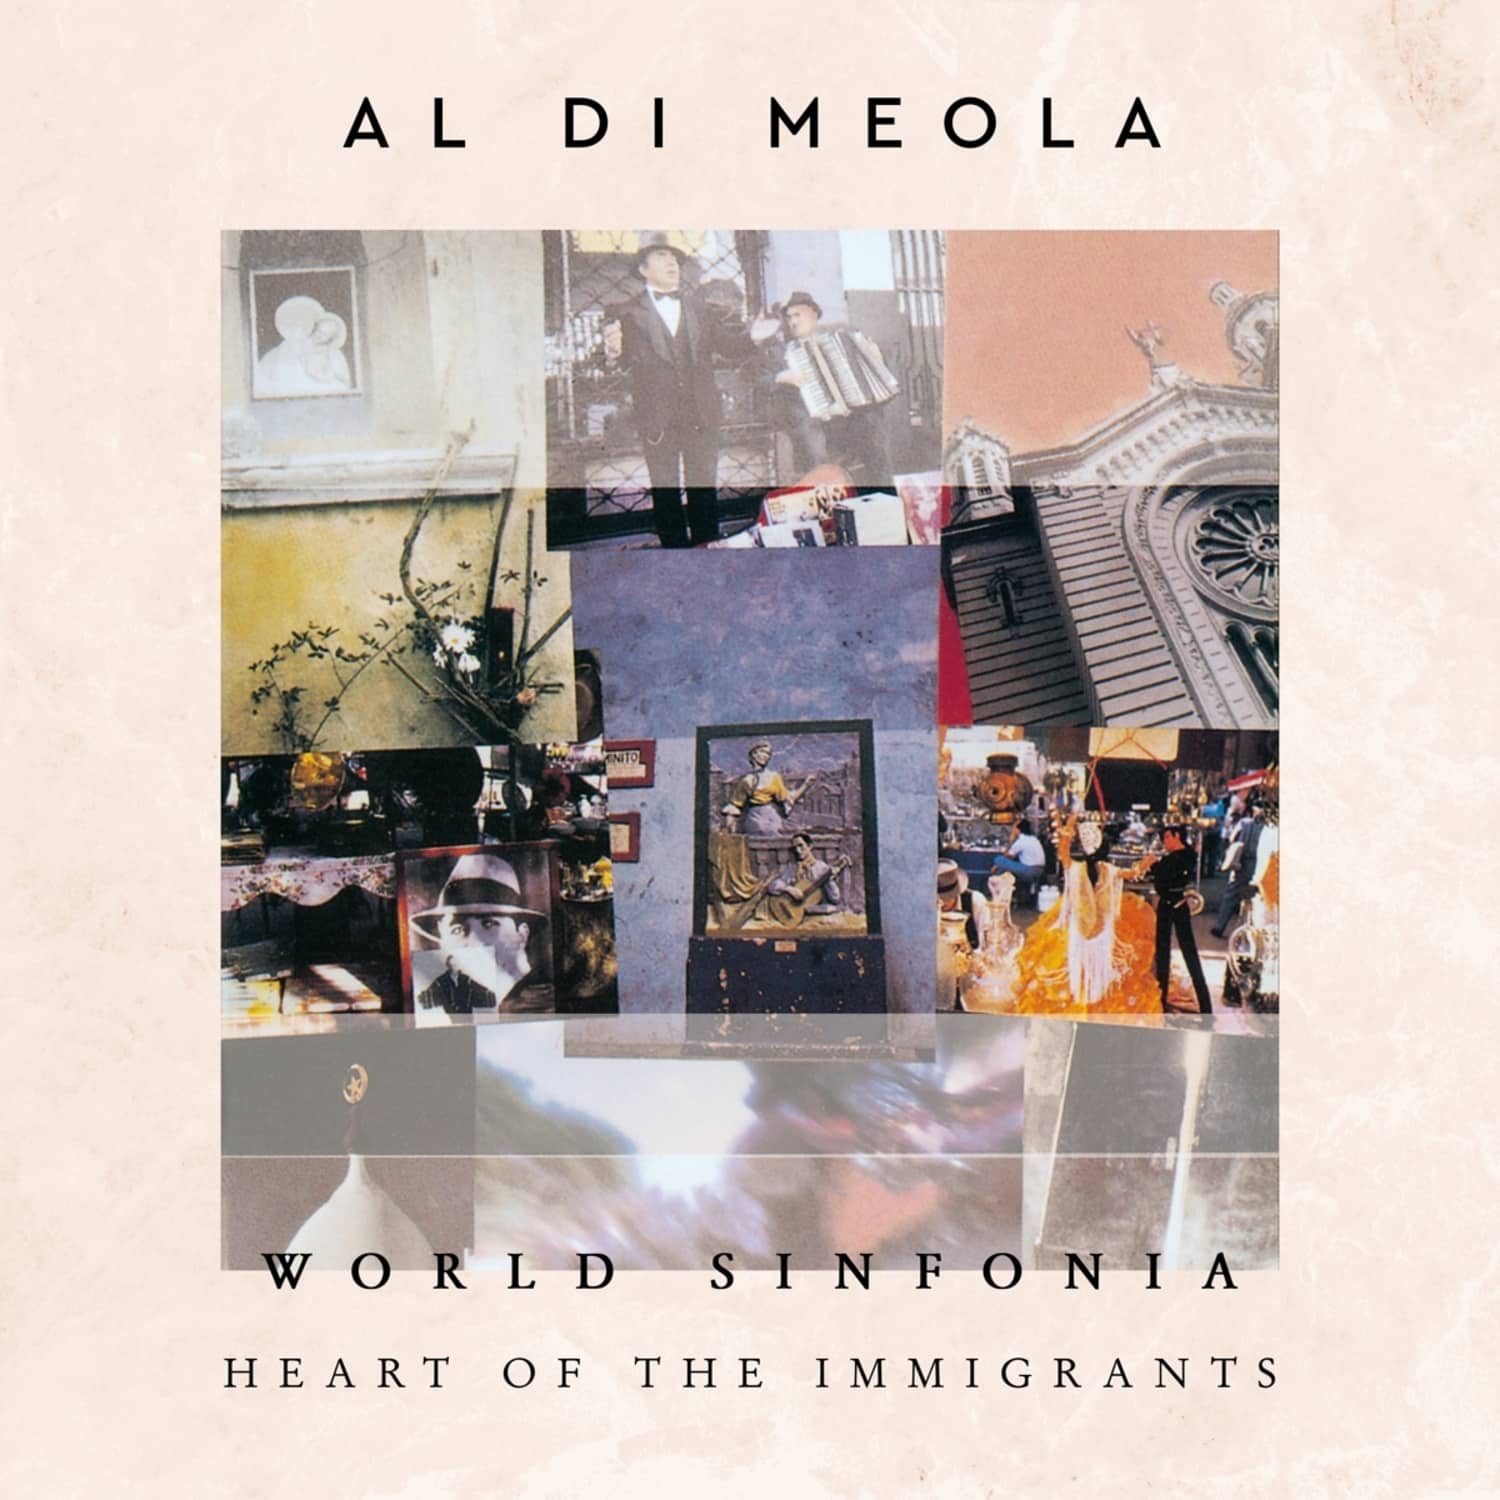  Al Di Meola - WORLD SINFONIA:HEART OF THE IMMIGRANTS 